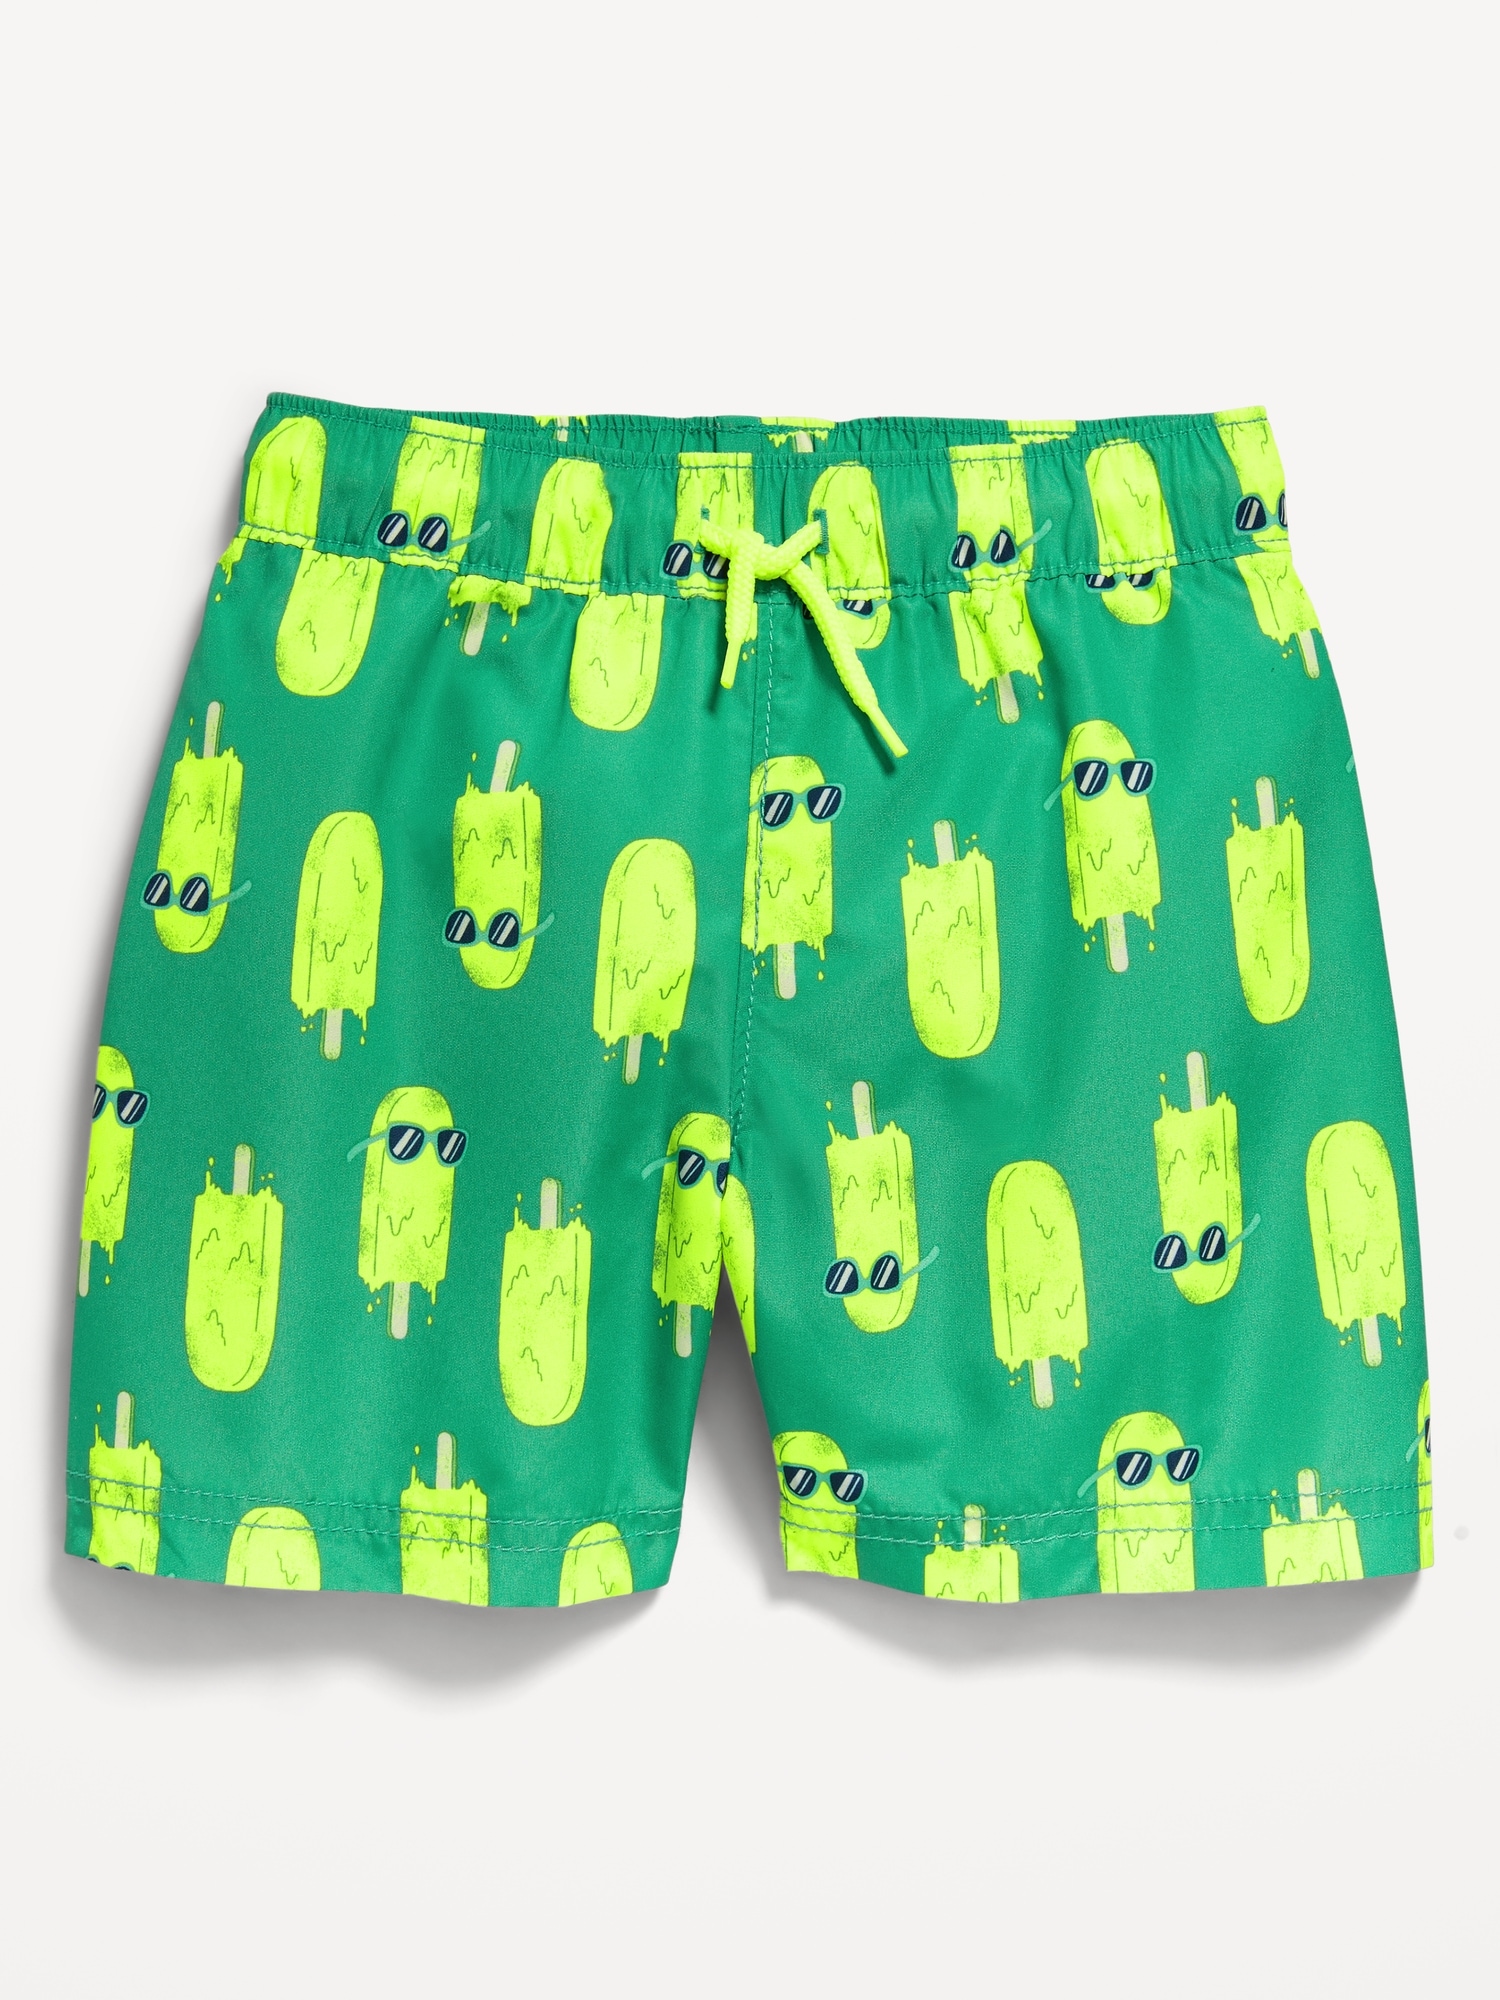 Matching Printed Swim Trunks for Toddler Boys